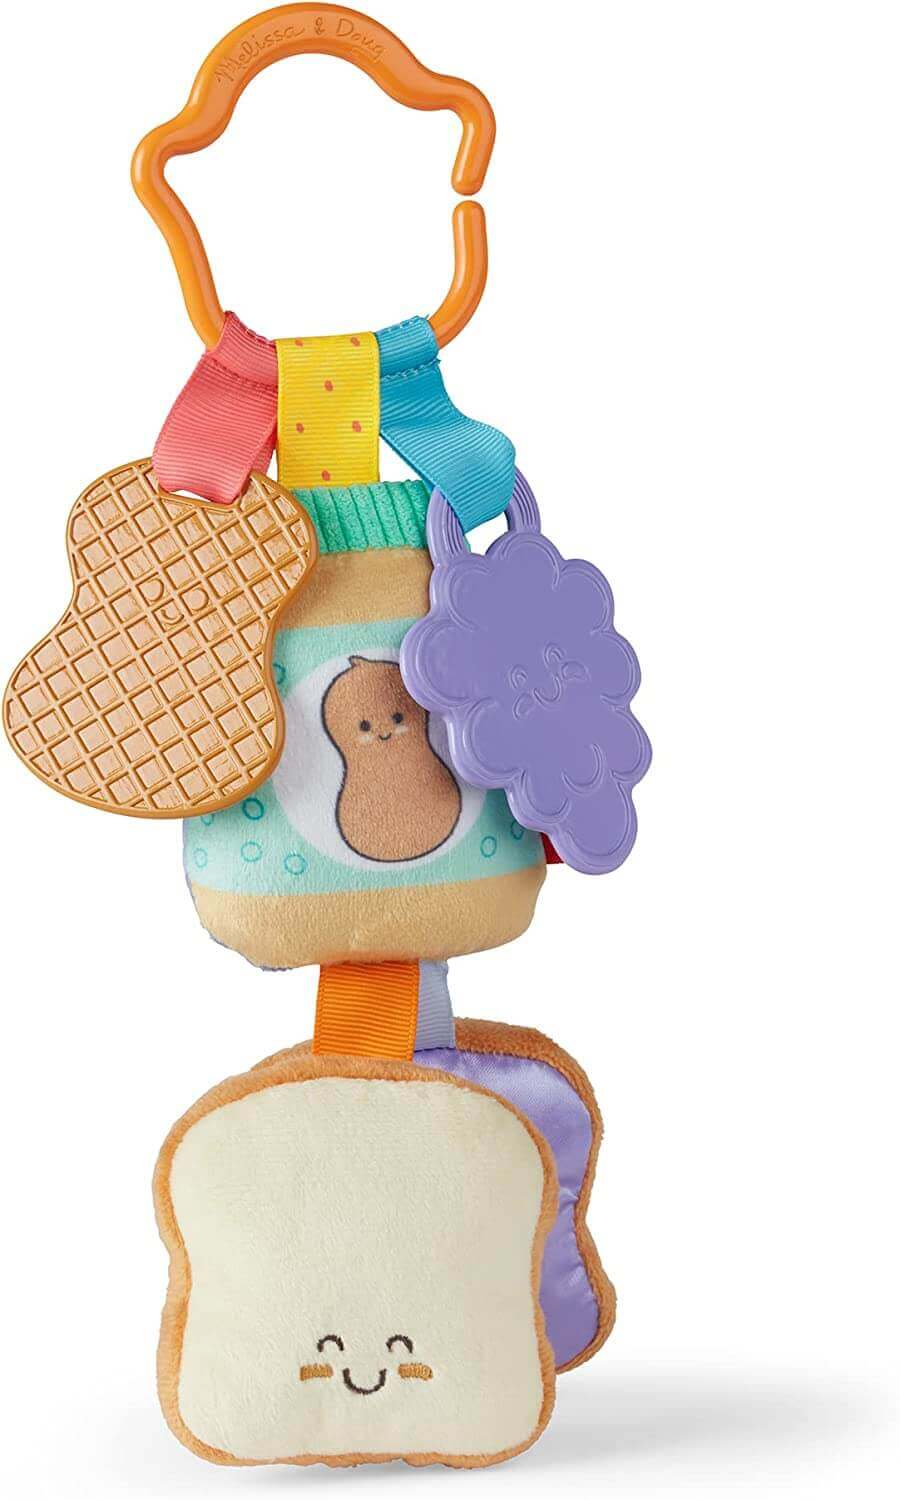 Melissa & Doug Take-Along Clip-On Infant Toy Style: Sandwich Take Along Baby Toy Earthlets